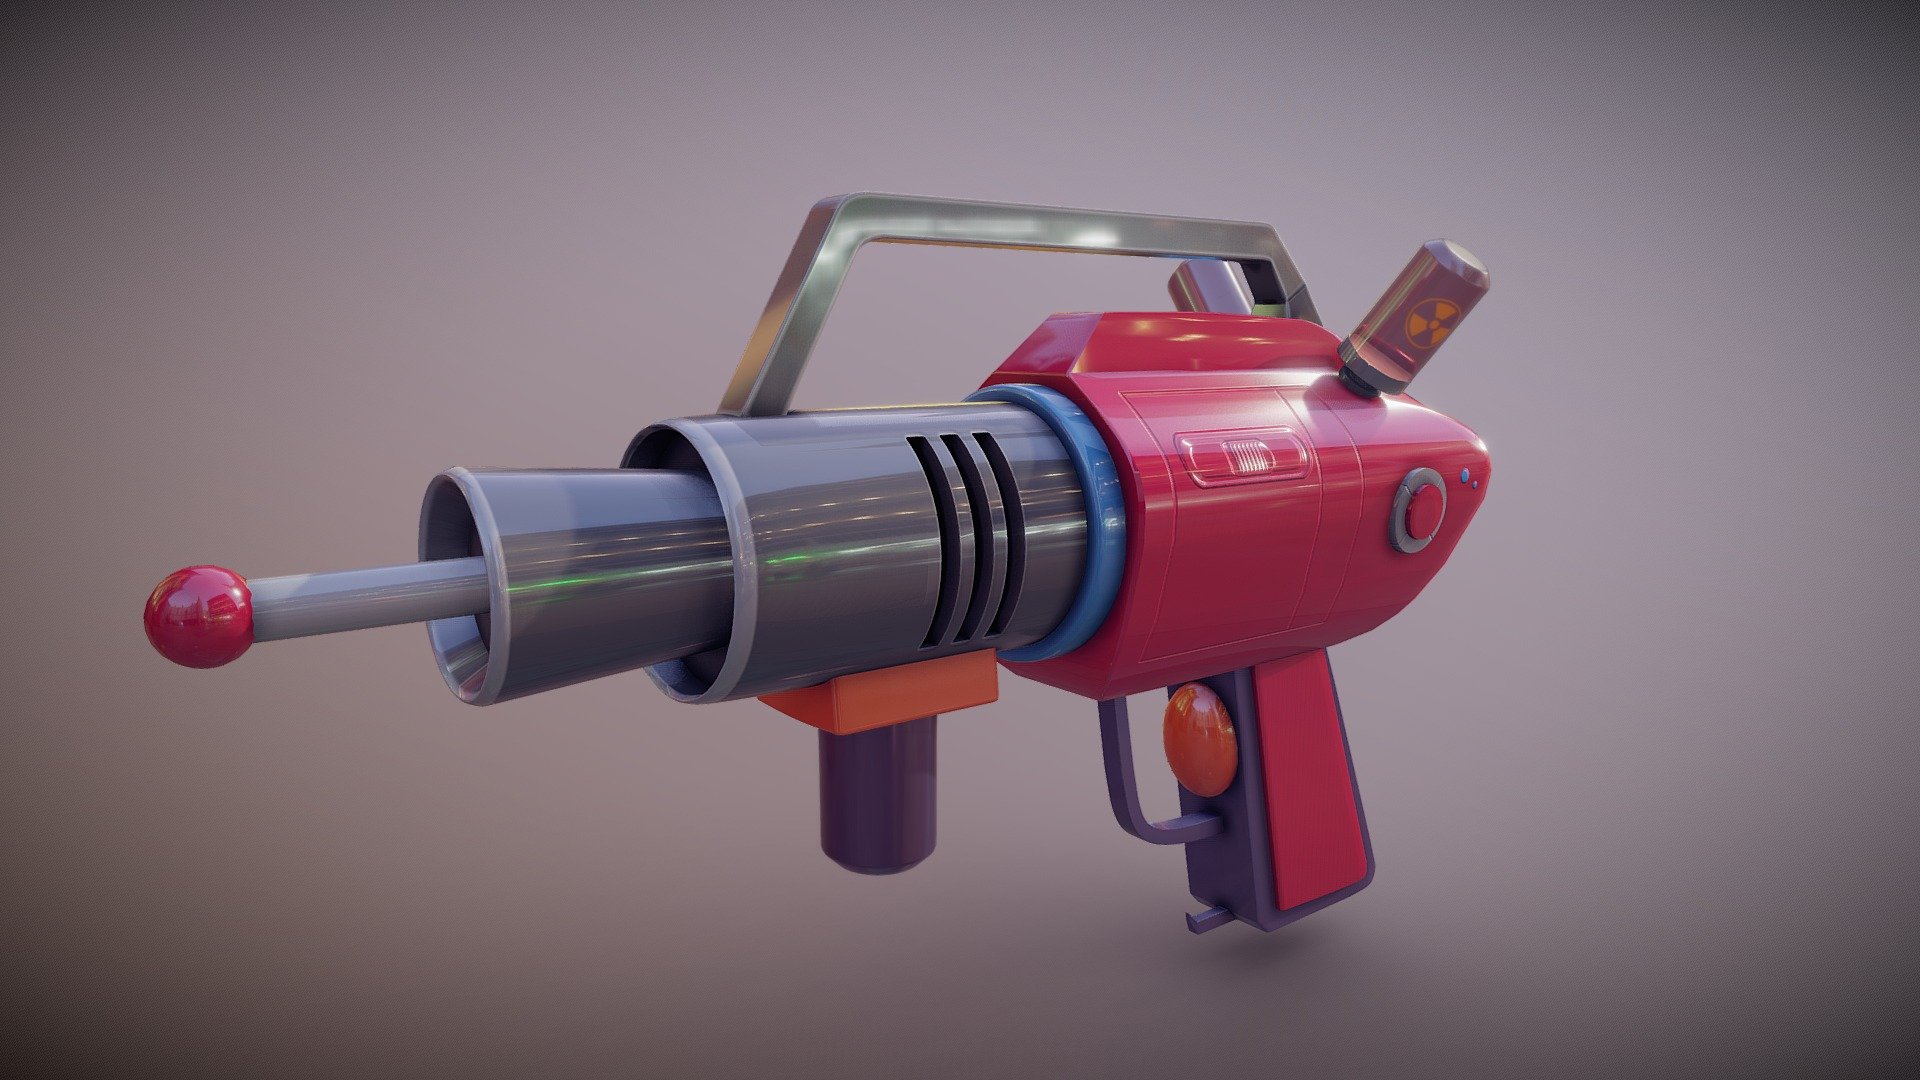 A retro sytle gun made for game engines - Retro Gun_02 - 3D model by Sherif Megahed (Garrette) (@garrette2010) 3d model